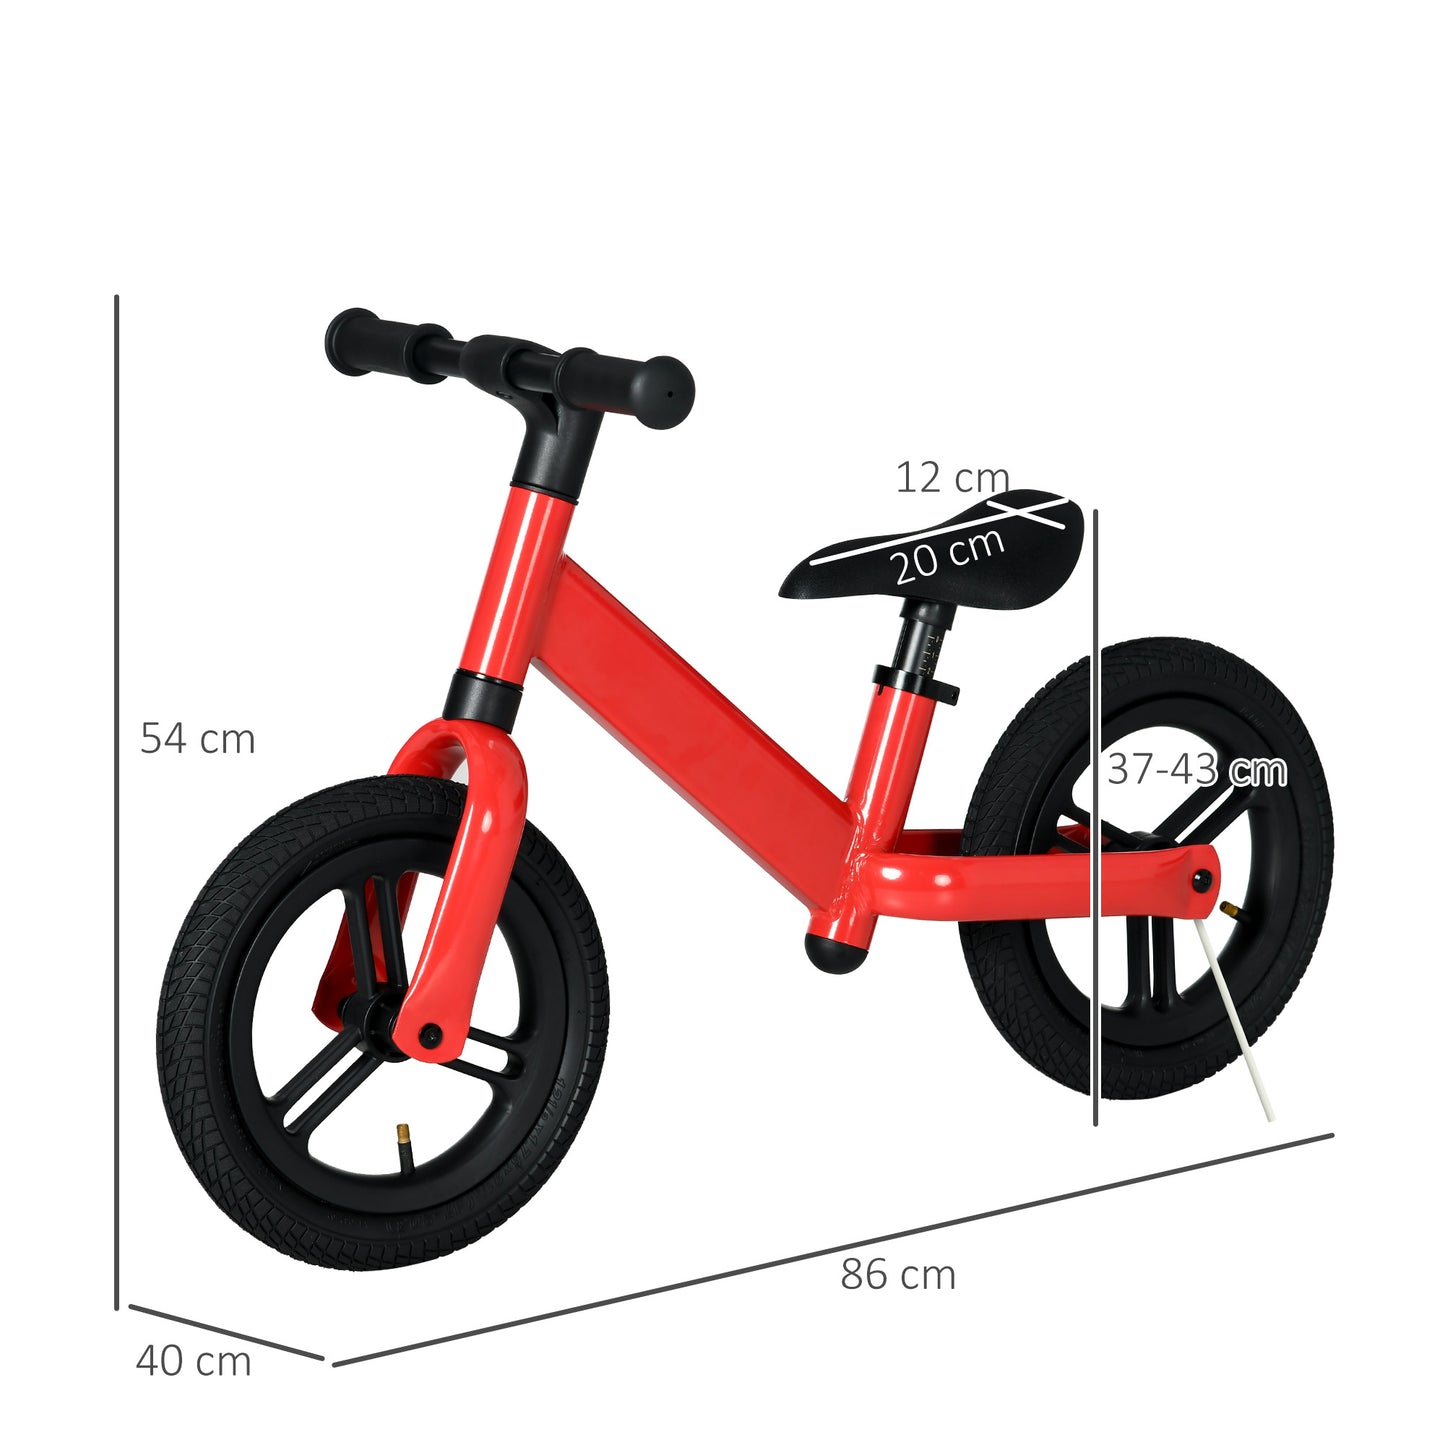 AIYAPLAY 12" Kids Balance Bike, No Pedal Training Bike for Children with Adjustable Seat, 360Â° Rotation Handlebars - Red